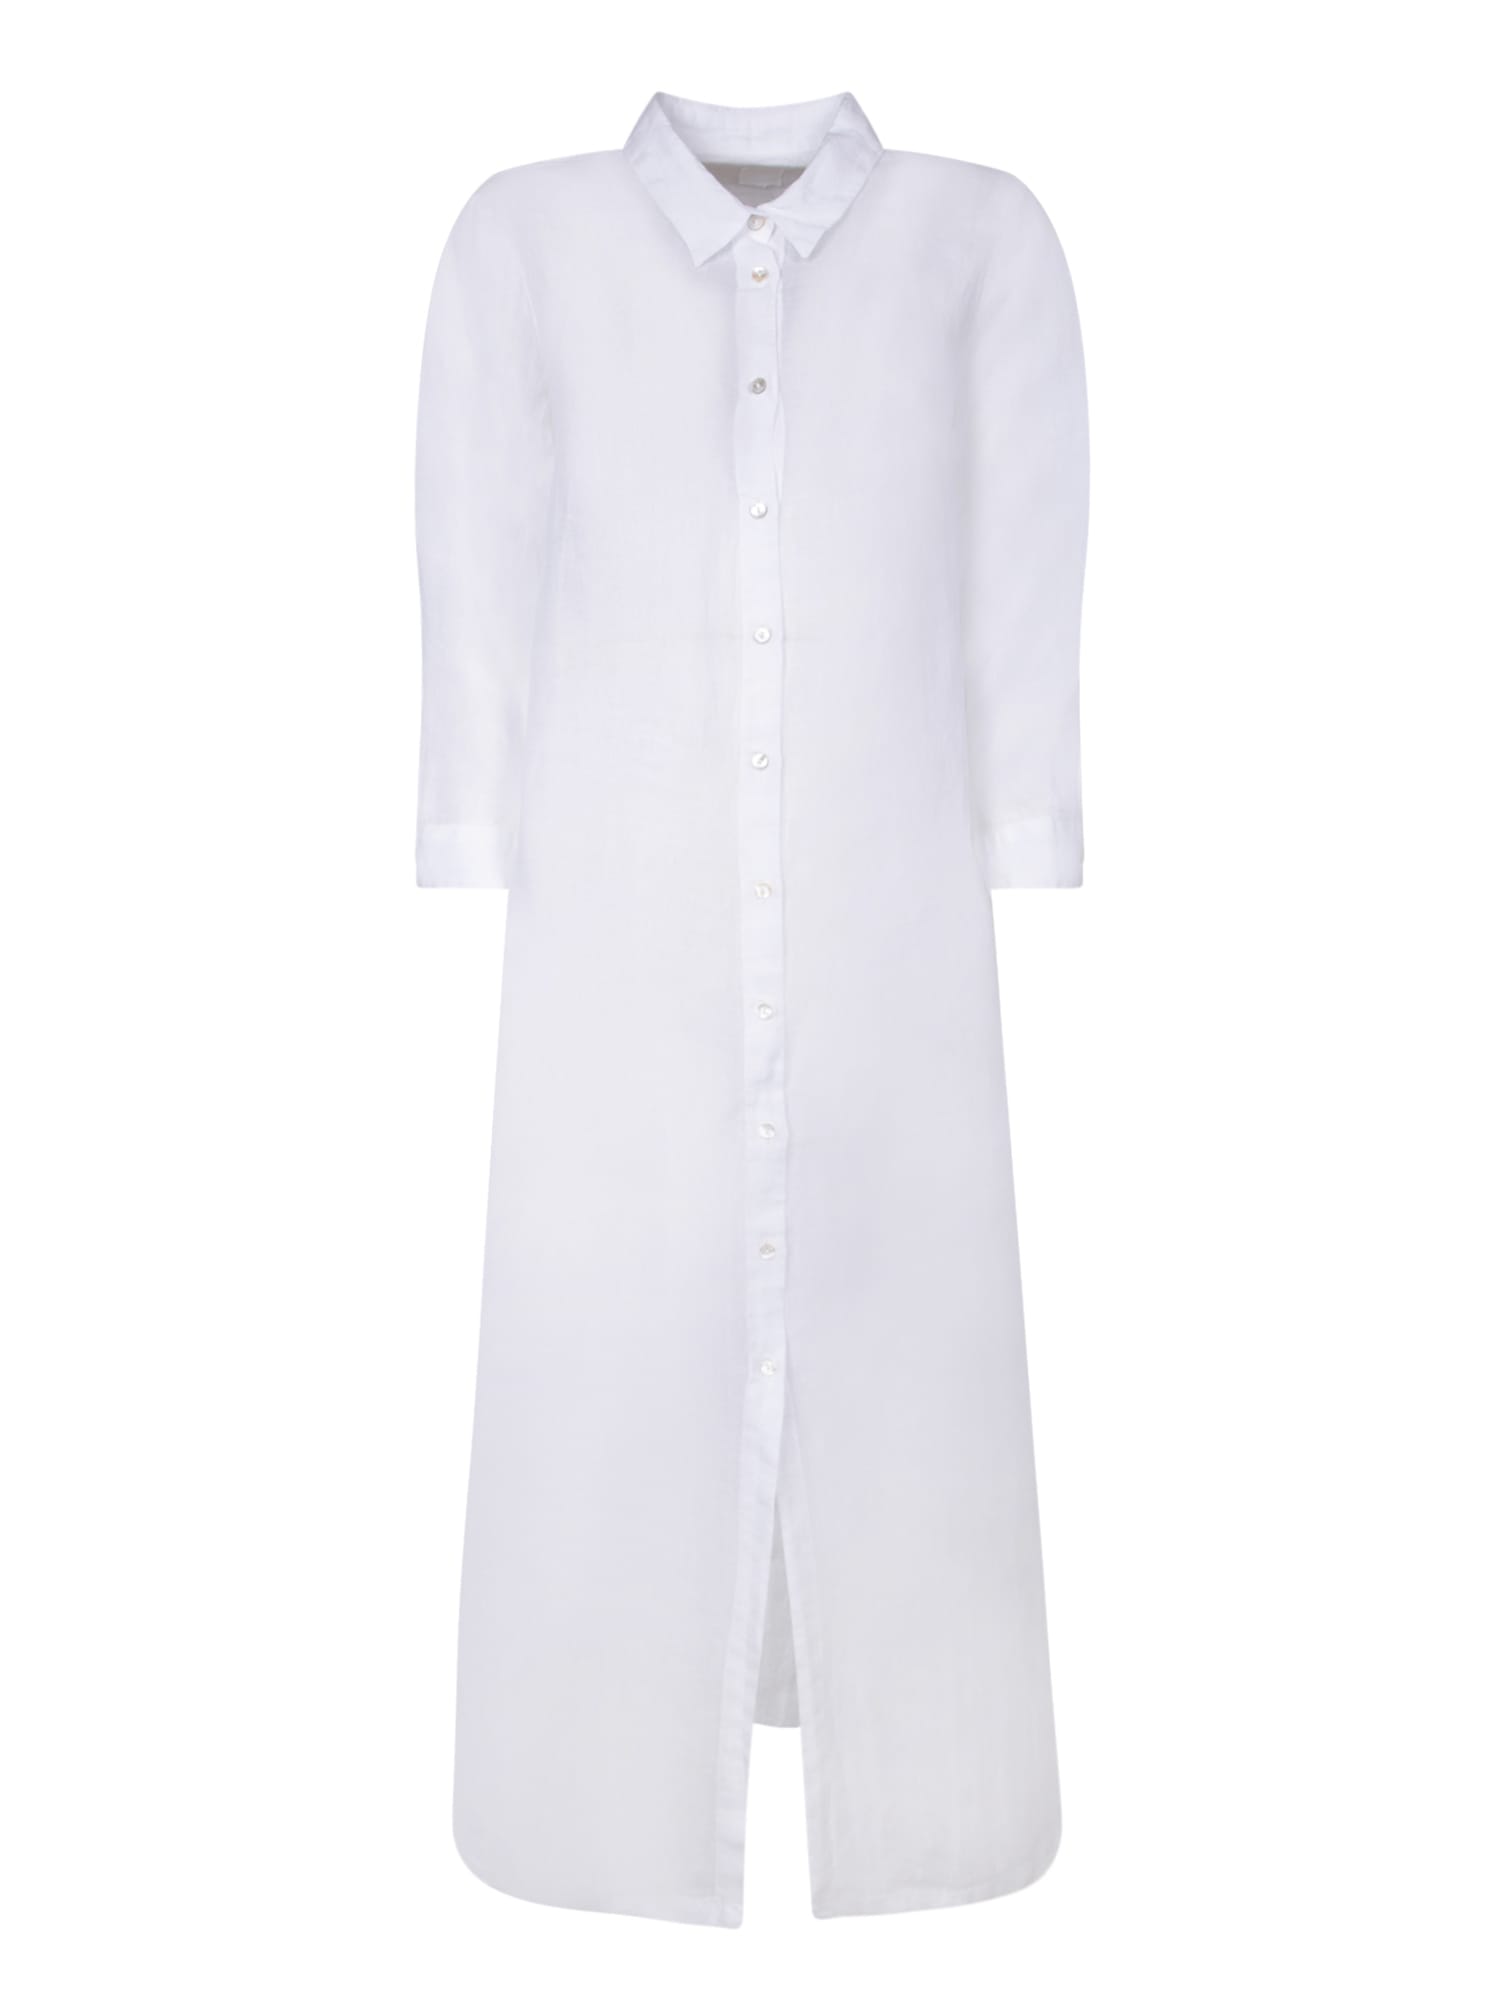 Shop 120% Lino White Linen Chemisier Dress